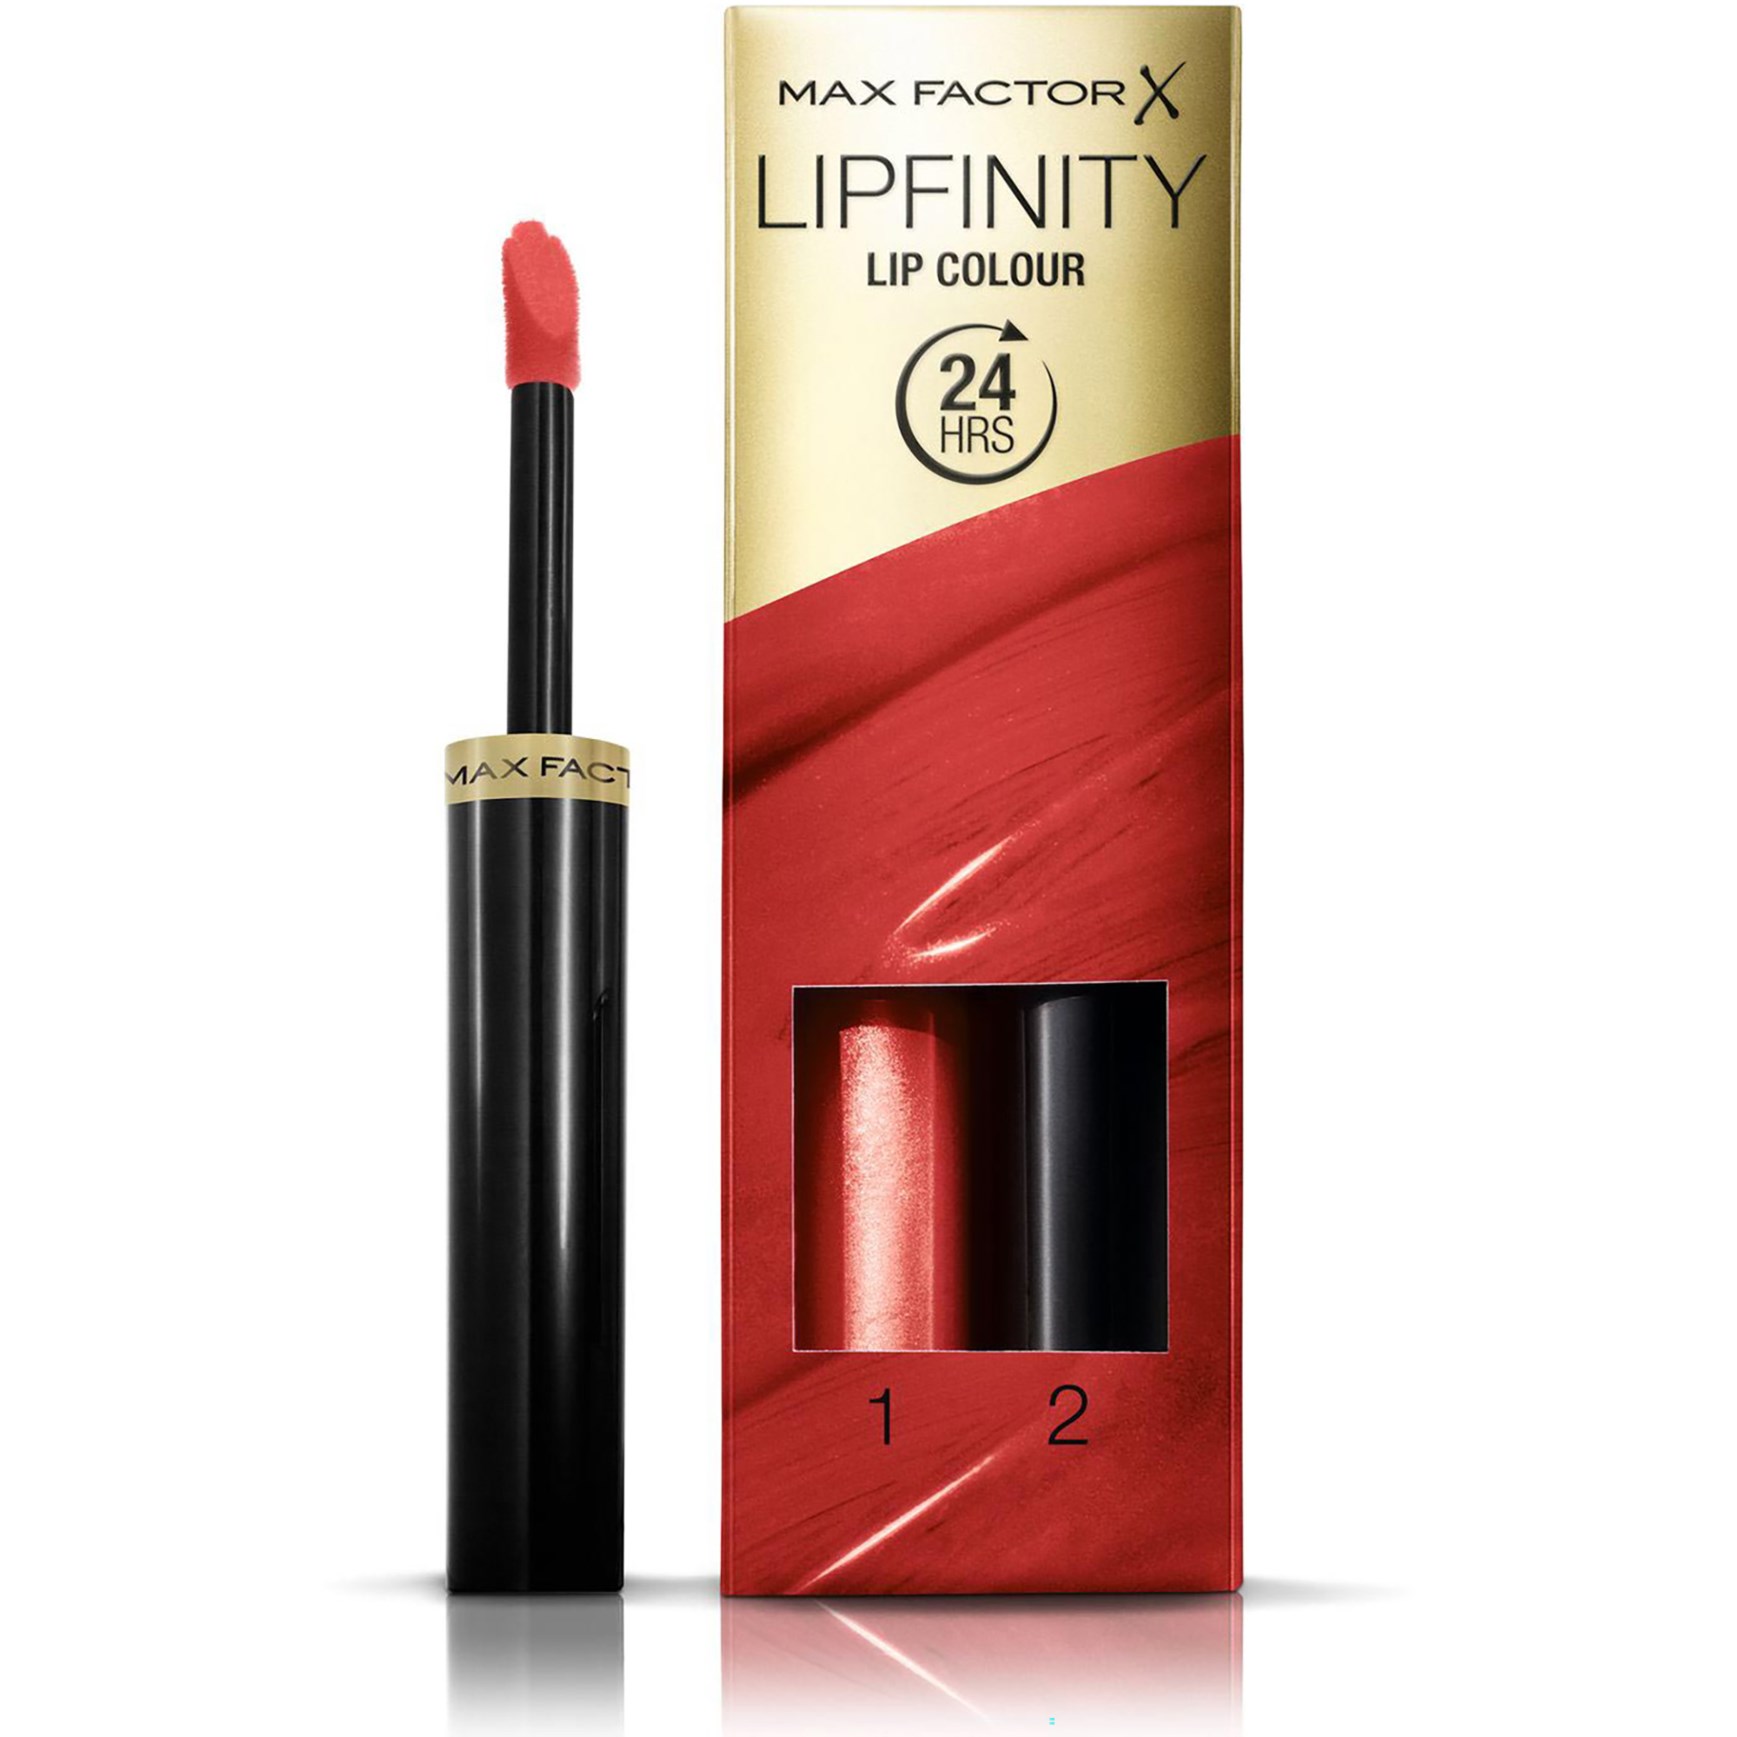 Max Factor Lipfinity Lip Colour 125 So Glamorous